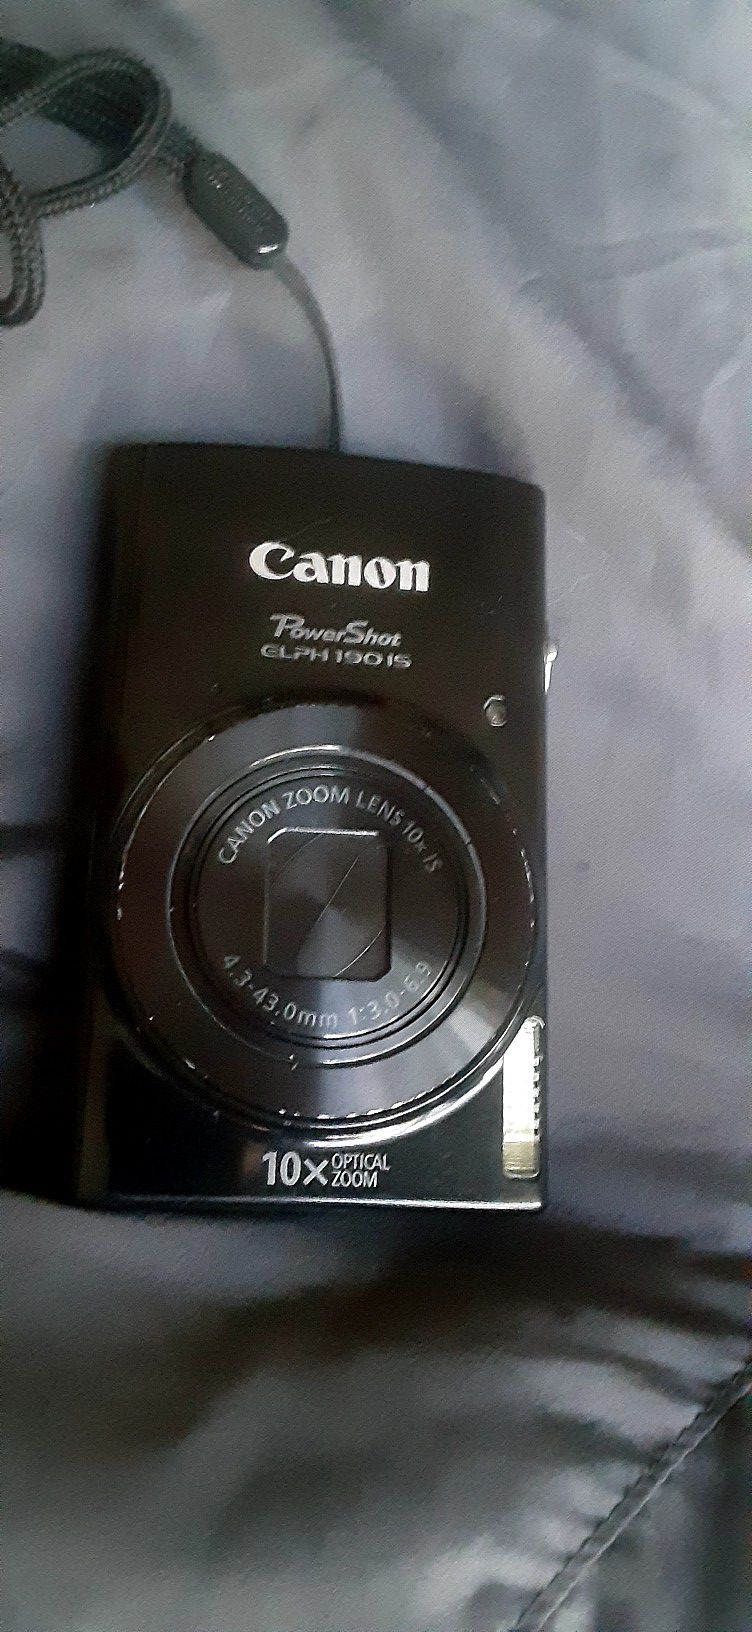 Canon Powershot elph 190 iS